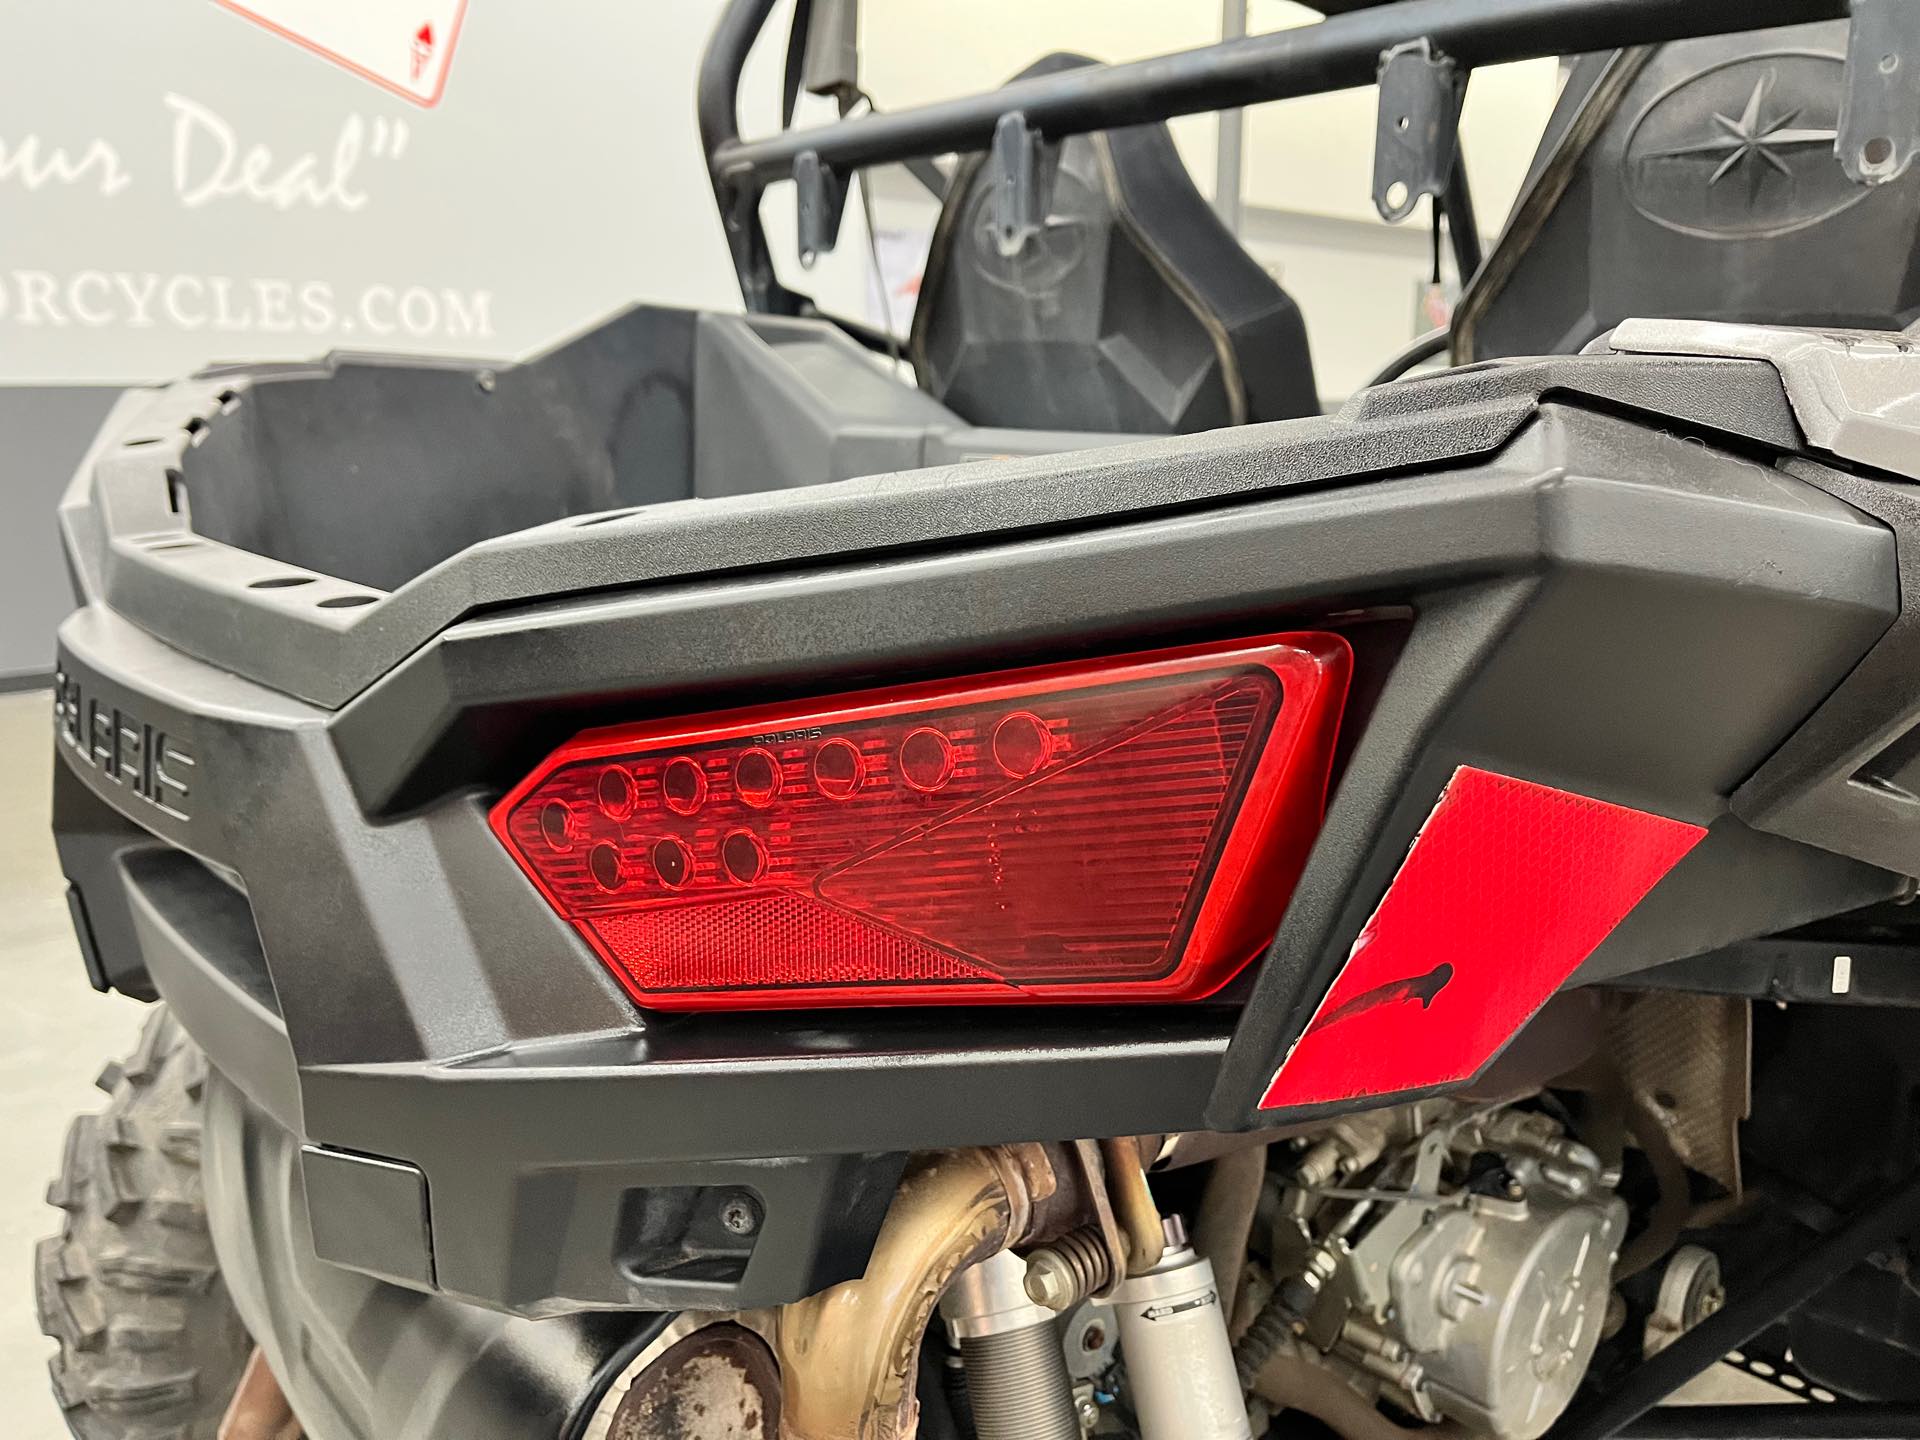 2020 Polaris RZR S 1000 EPS at Aces Motorcycles - Denver